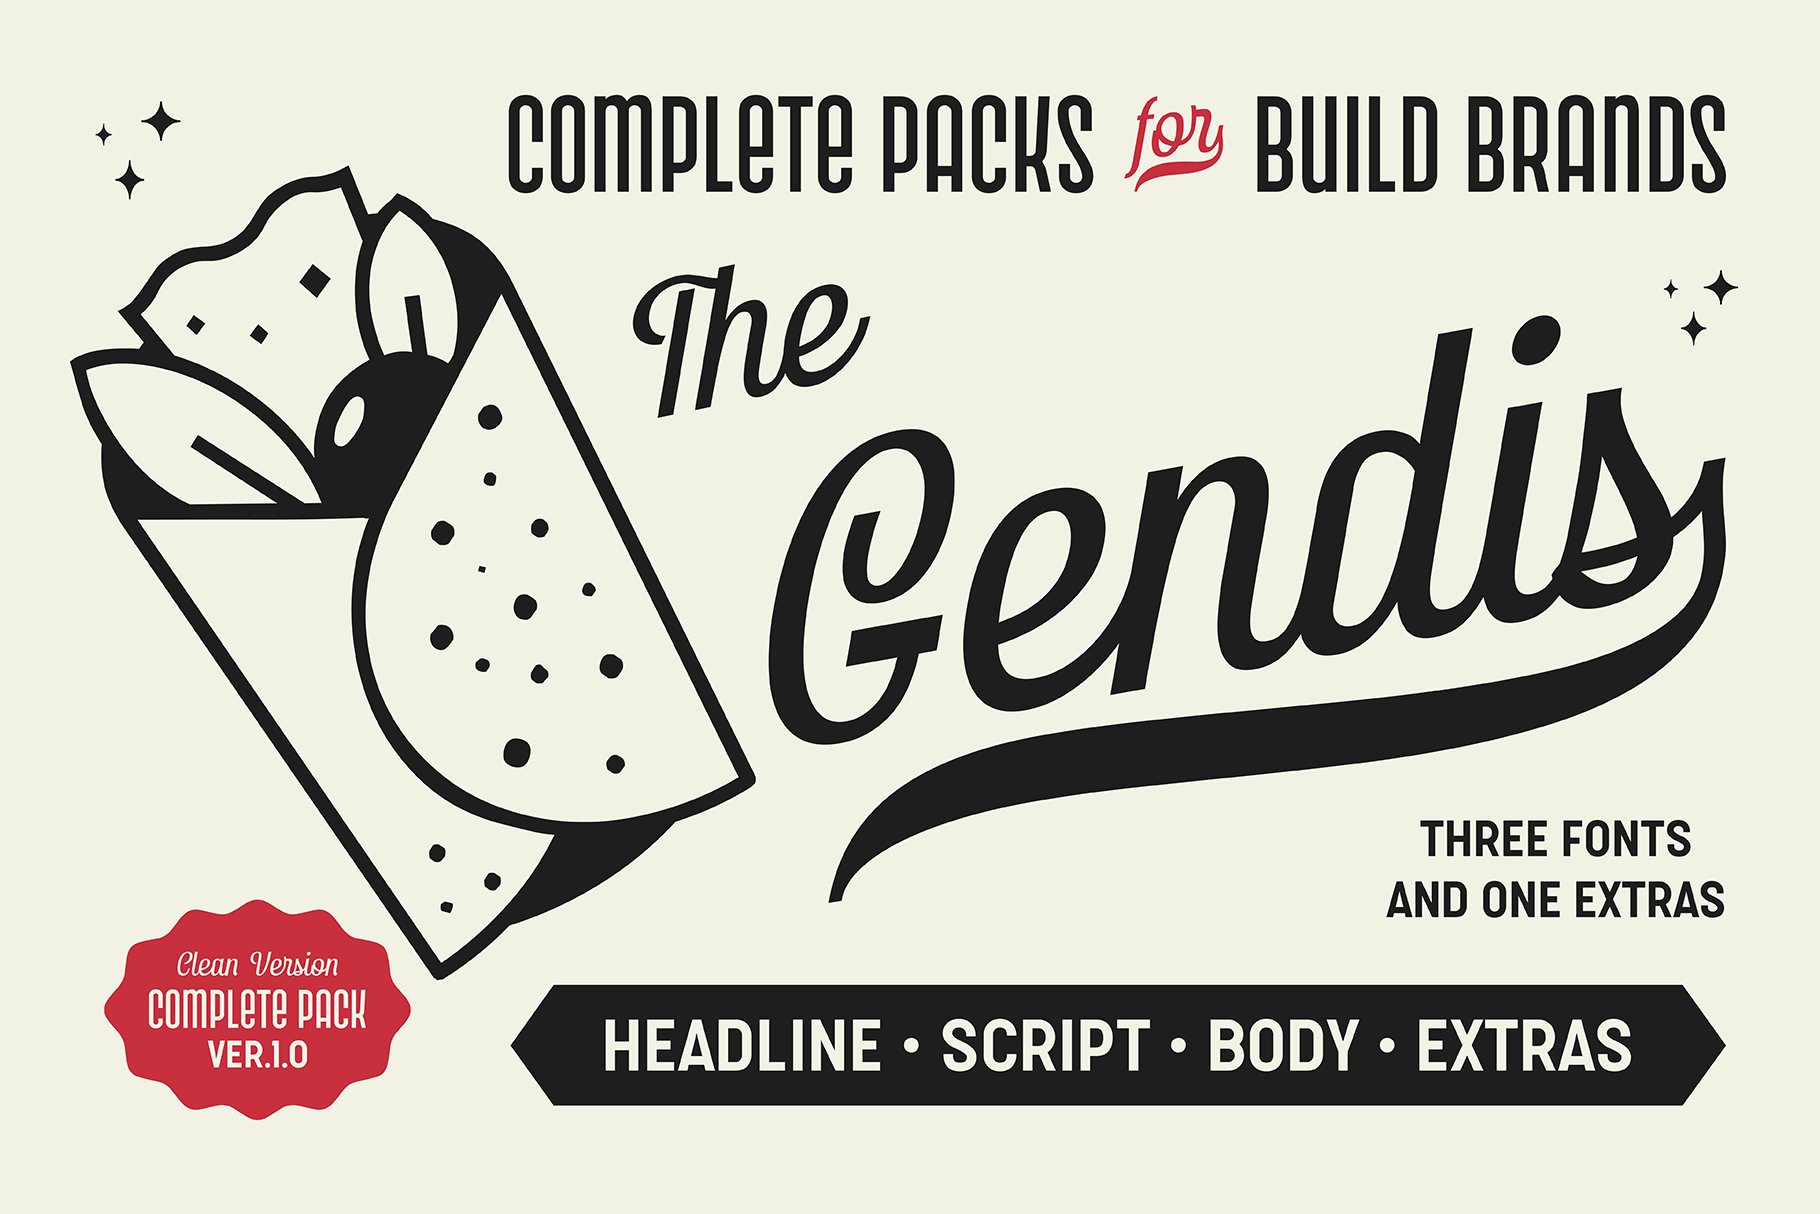 Gendis - Font Packs cover image.